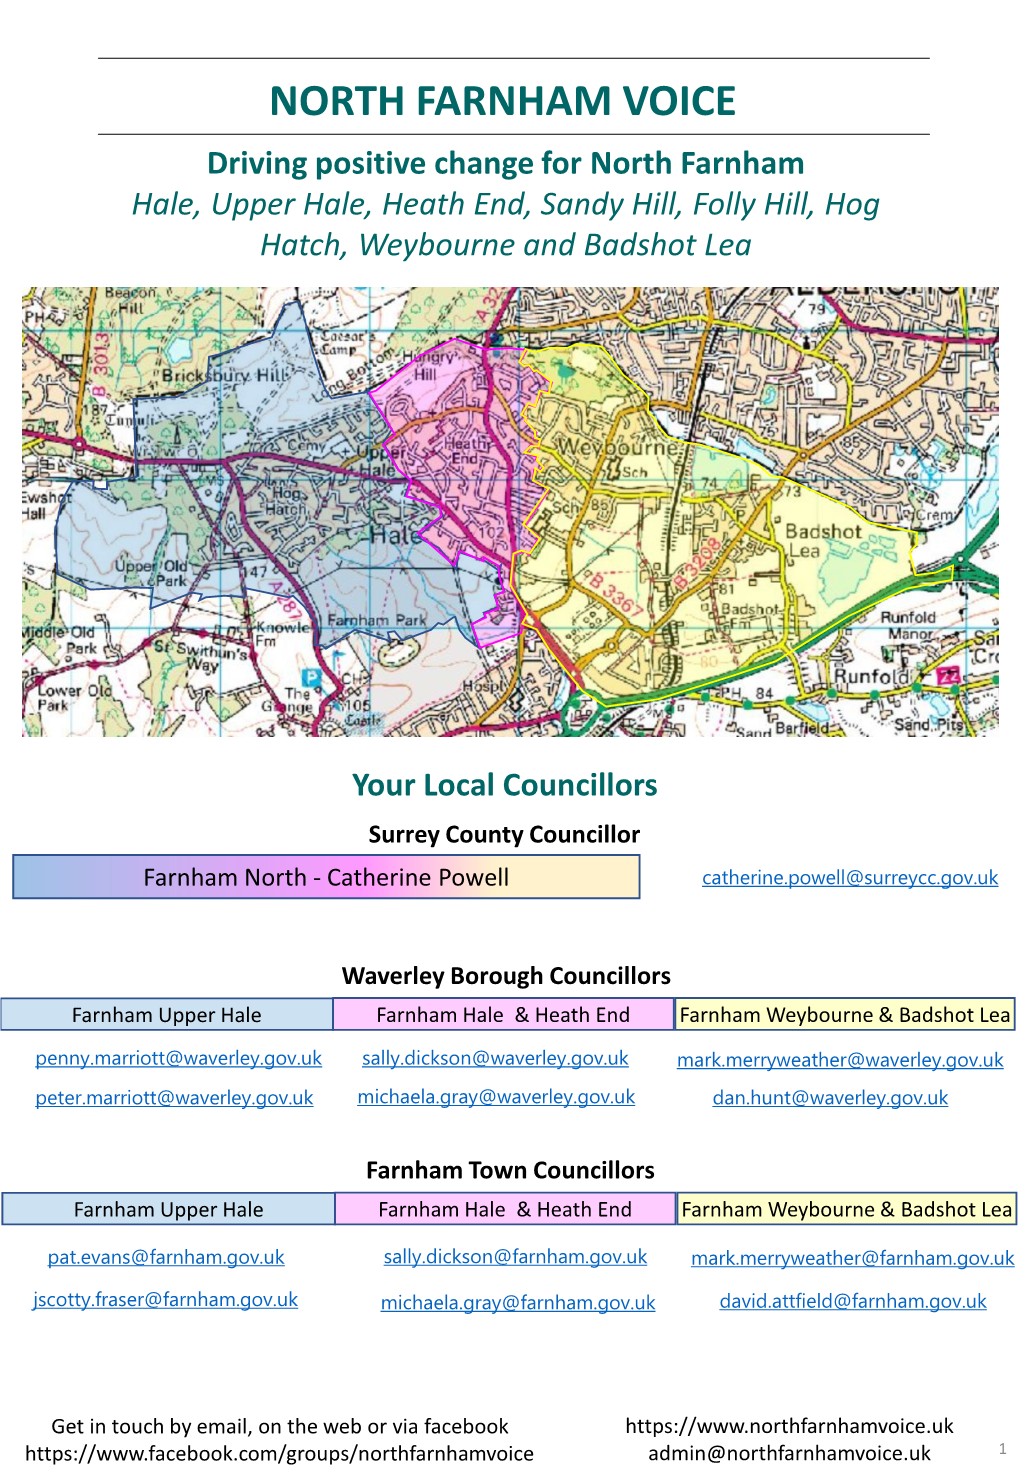 NORTH FARNHAM VOICE Driving Positive Change for North Farnham Hale, Upper Hale, Heath End, Sandy Hill, Folly Hill, Hog Hatch, Weybourne and Badshot Lea